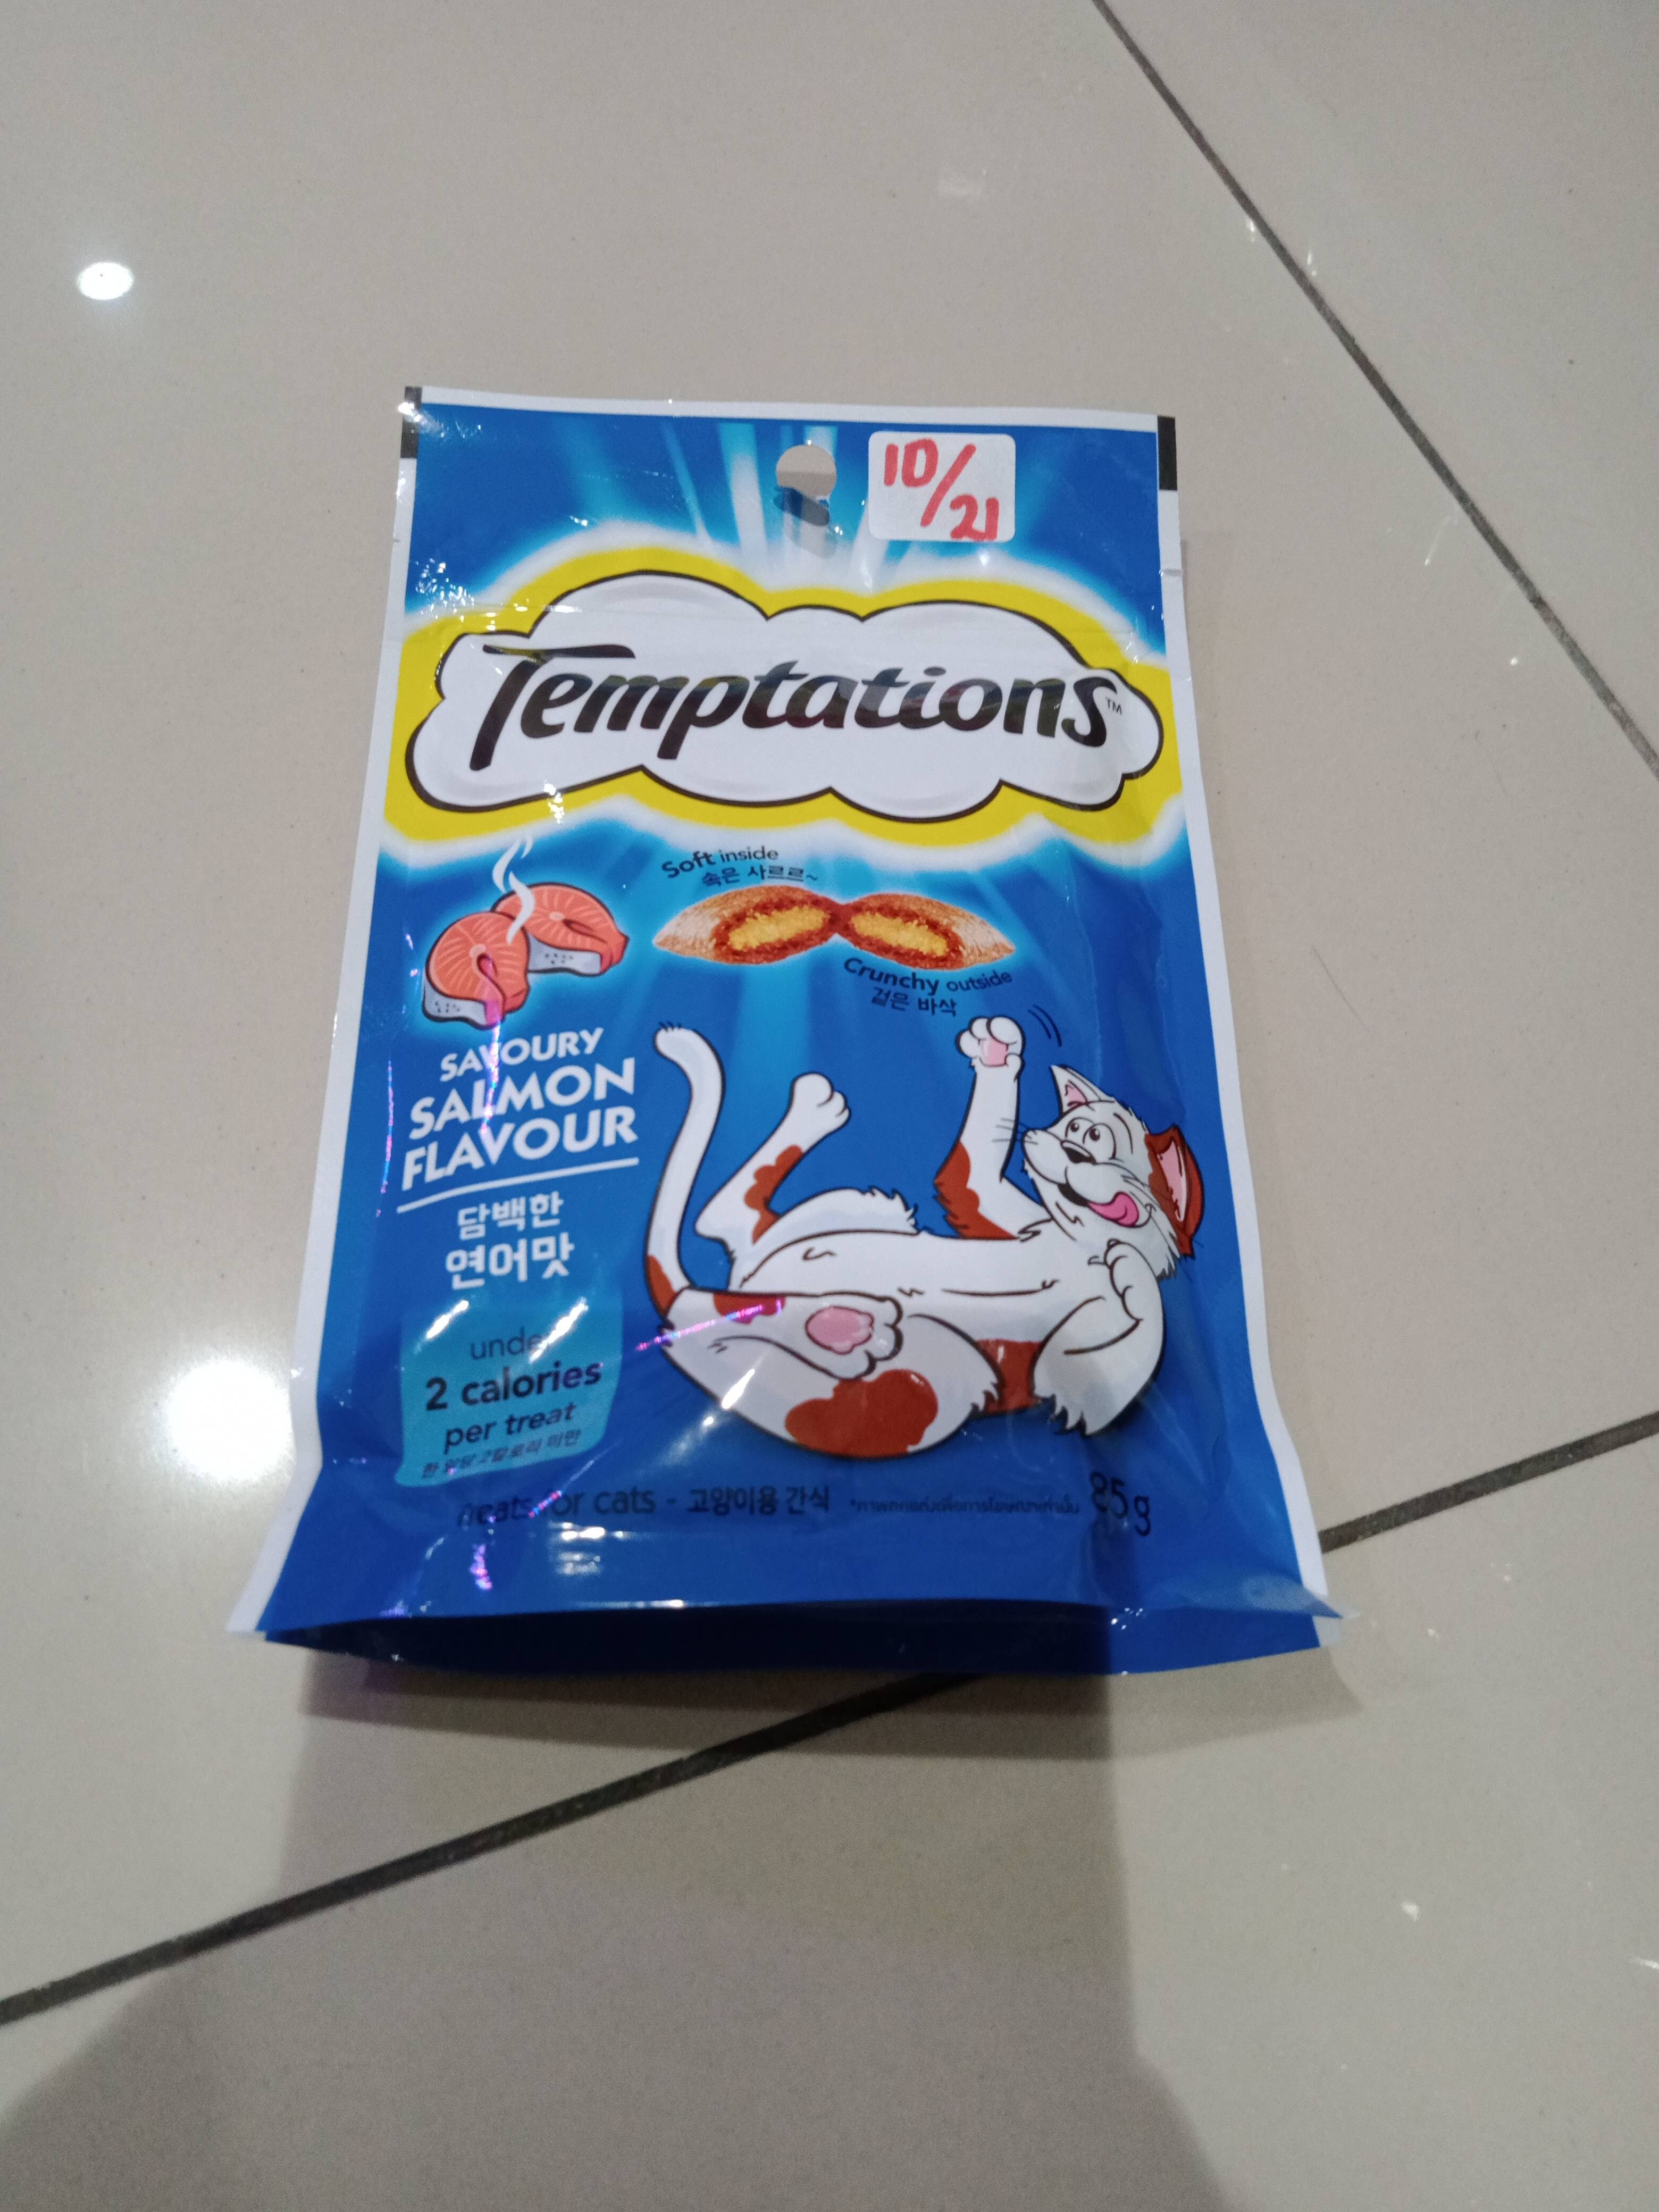 Temptations salmon - Product - so